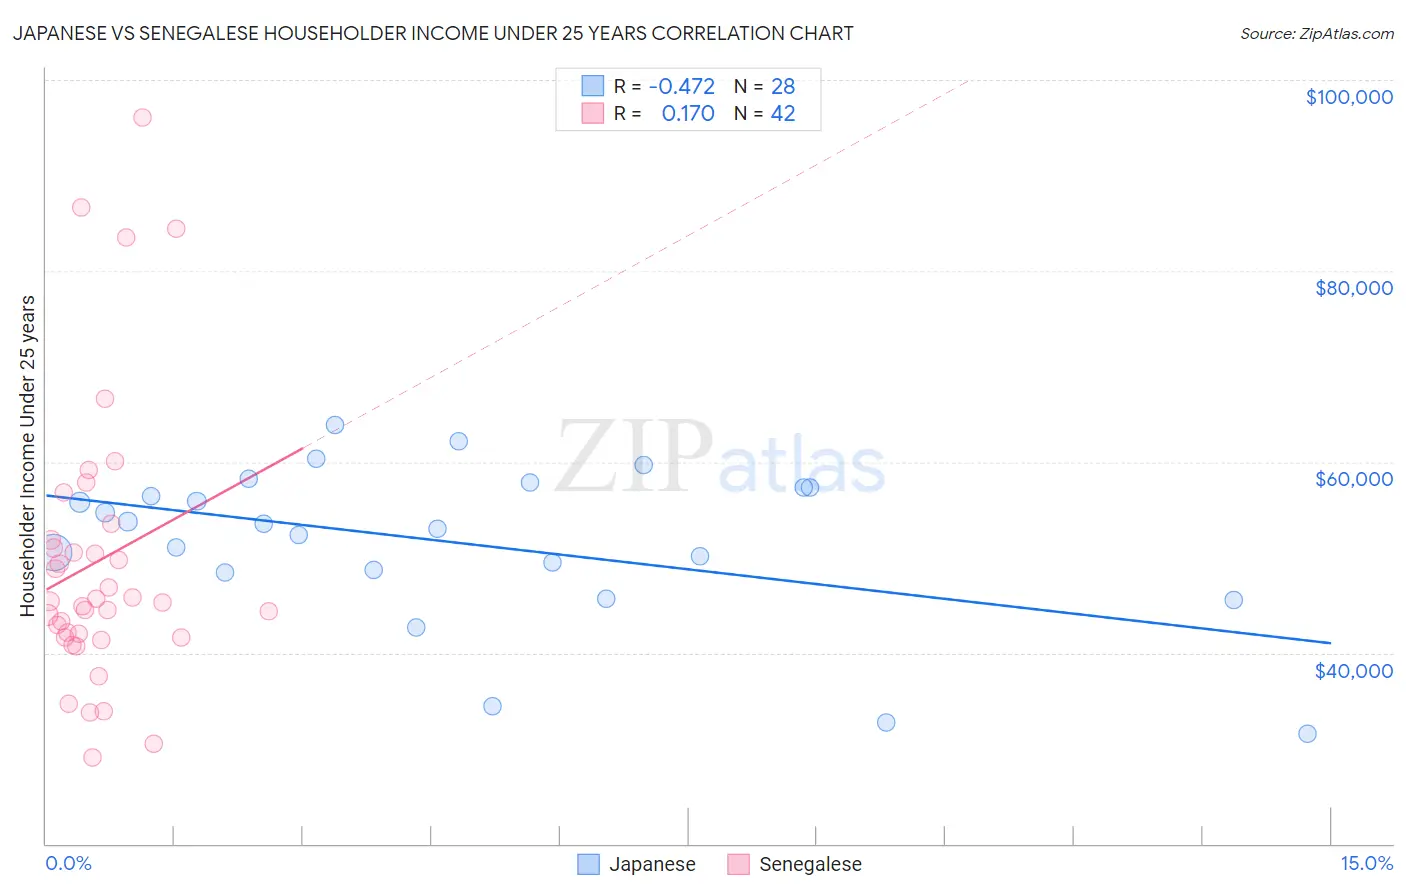 Japanese vs Senegalese Householder Income Under 25 years